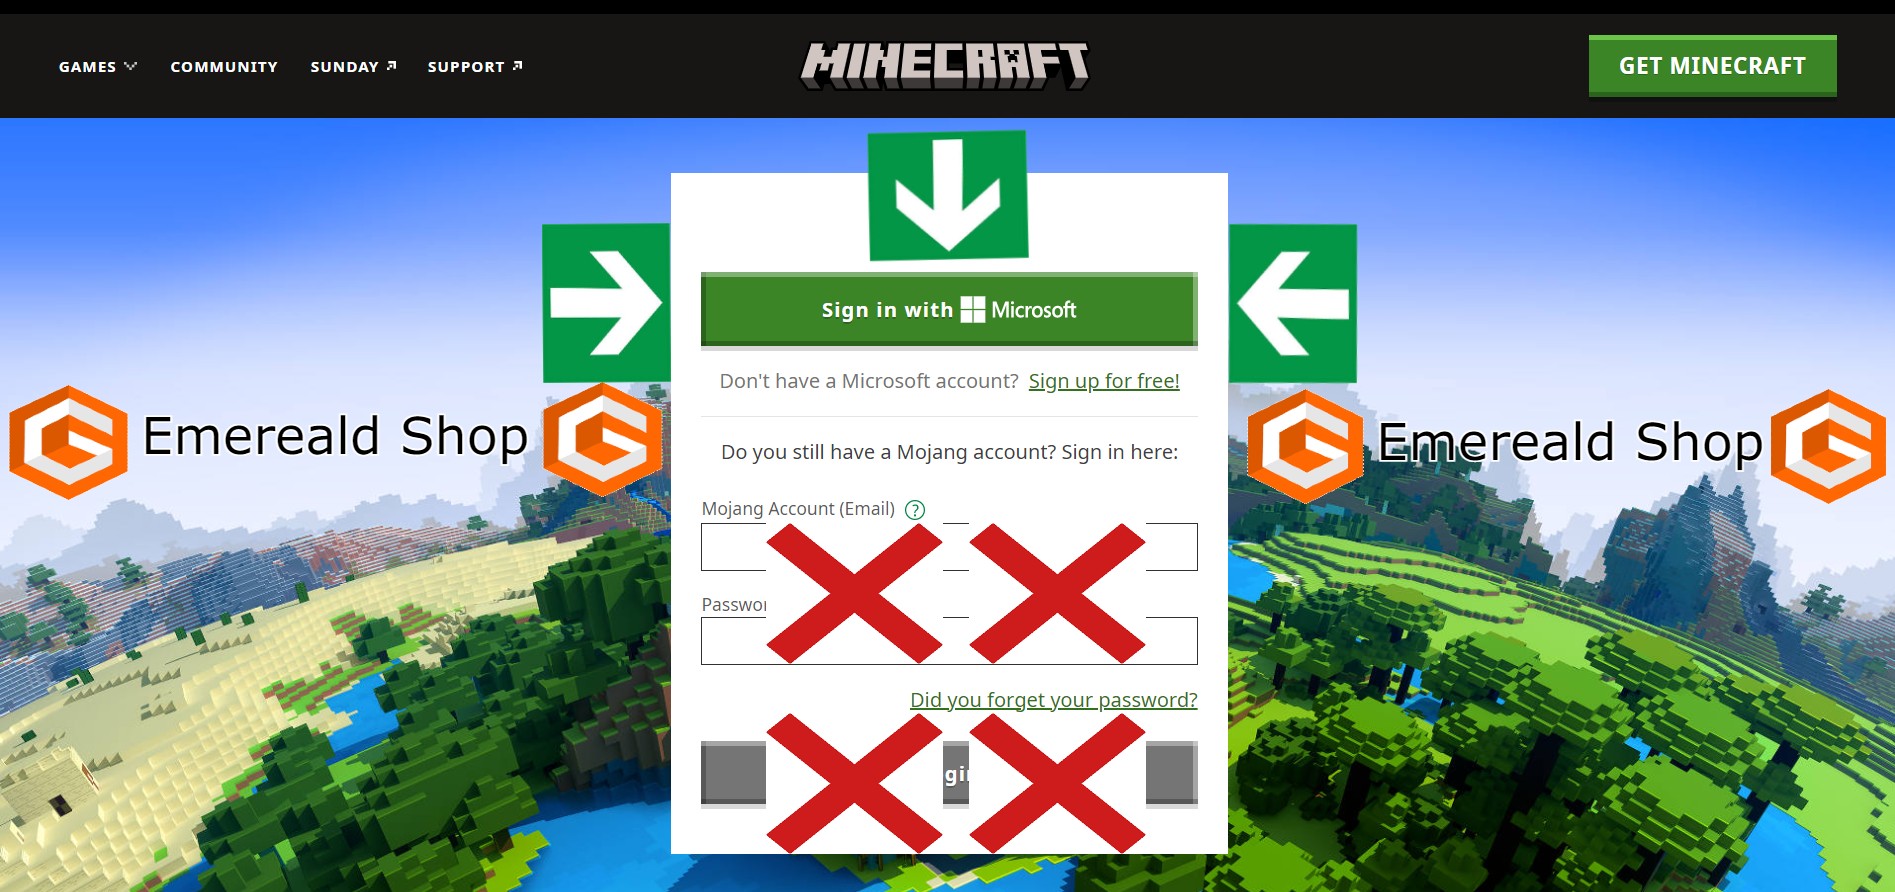 Minecraft Premium! NOT GAME PASS ACCOUNT - Life time! First mail - Full change (Mail,password,skin nick) Origin minecraft.net account!